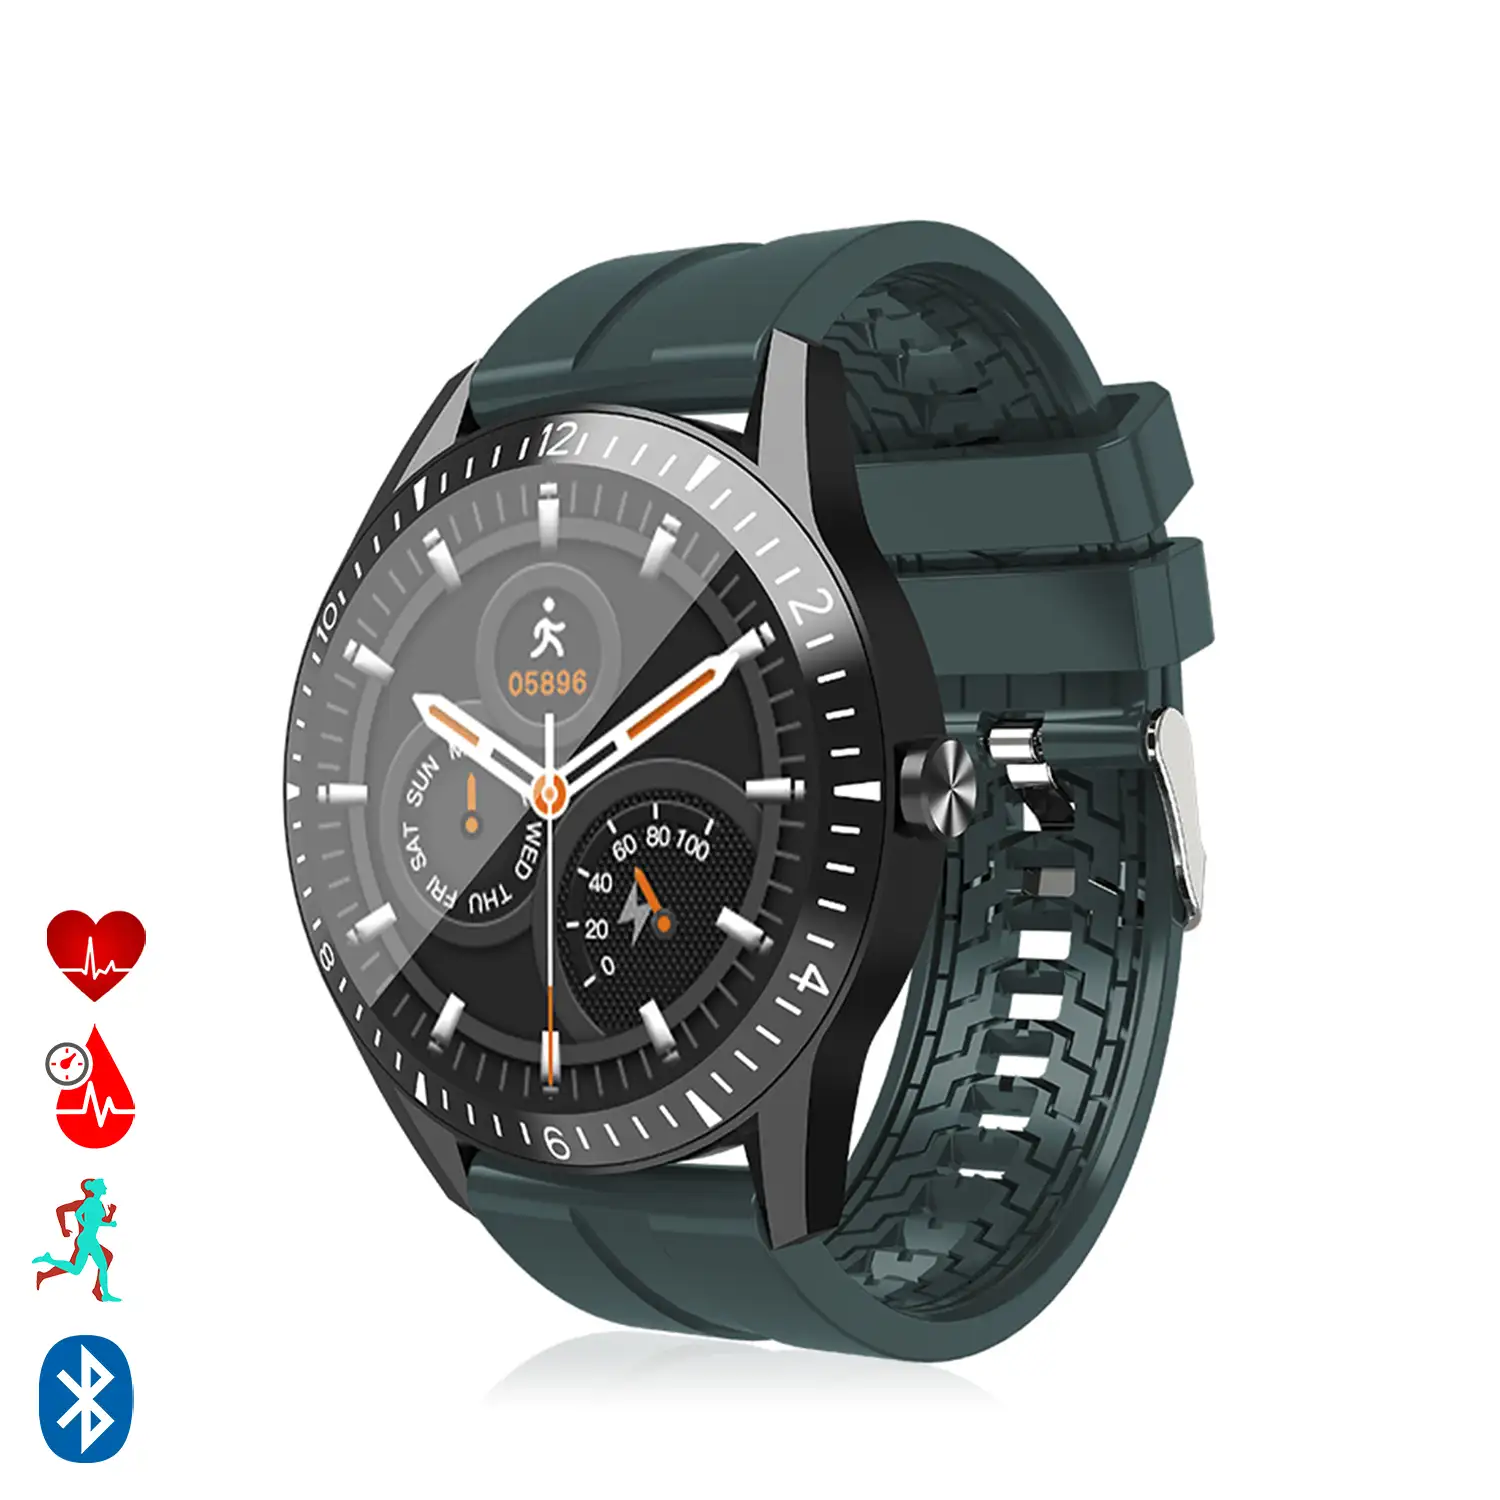 Smartwatch Y20 multideportivo con monitor cardiaco, sumergible, dial personalizable